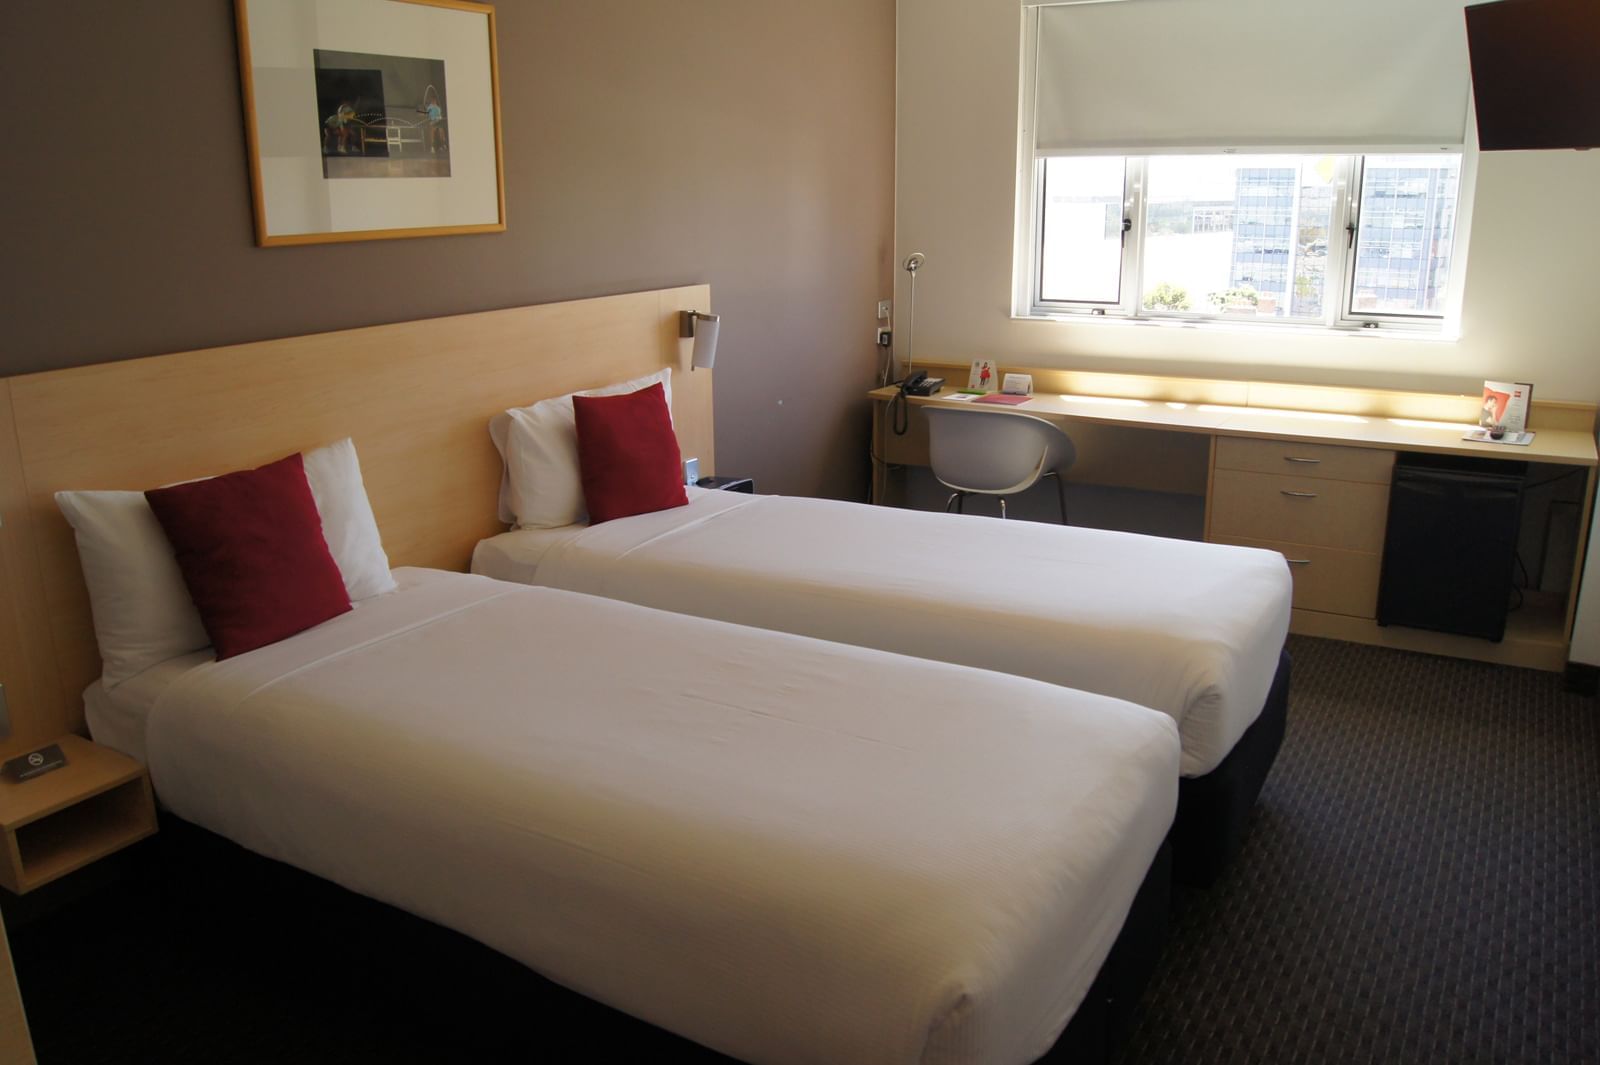 Beds in Standard King Room at Novotel Sydney Olympic Park